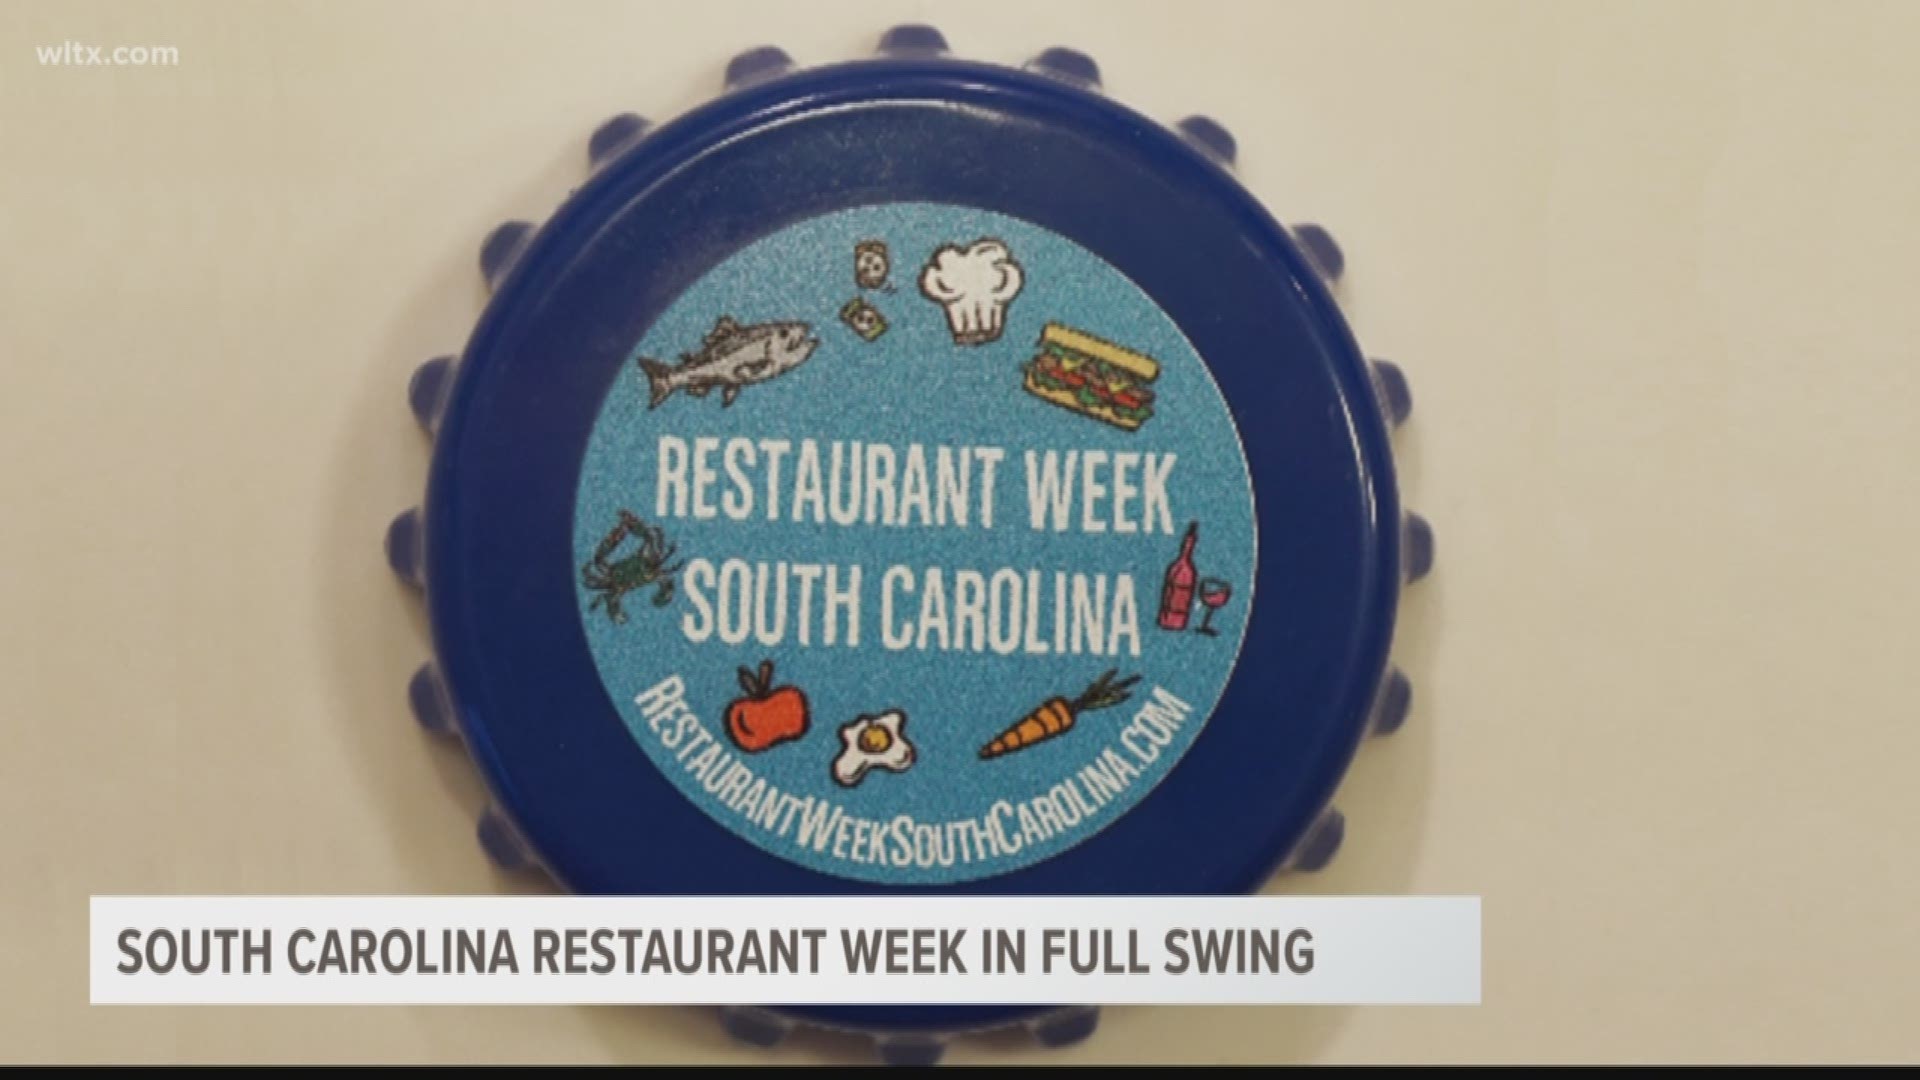 Columbia's restaurant week lasts until January 20.